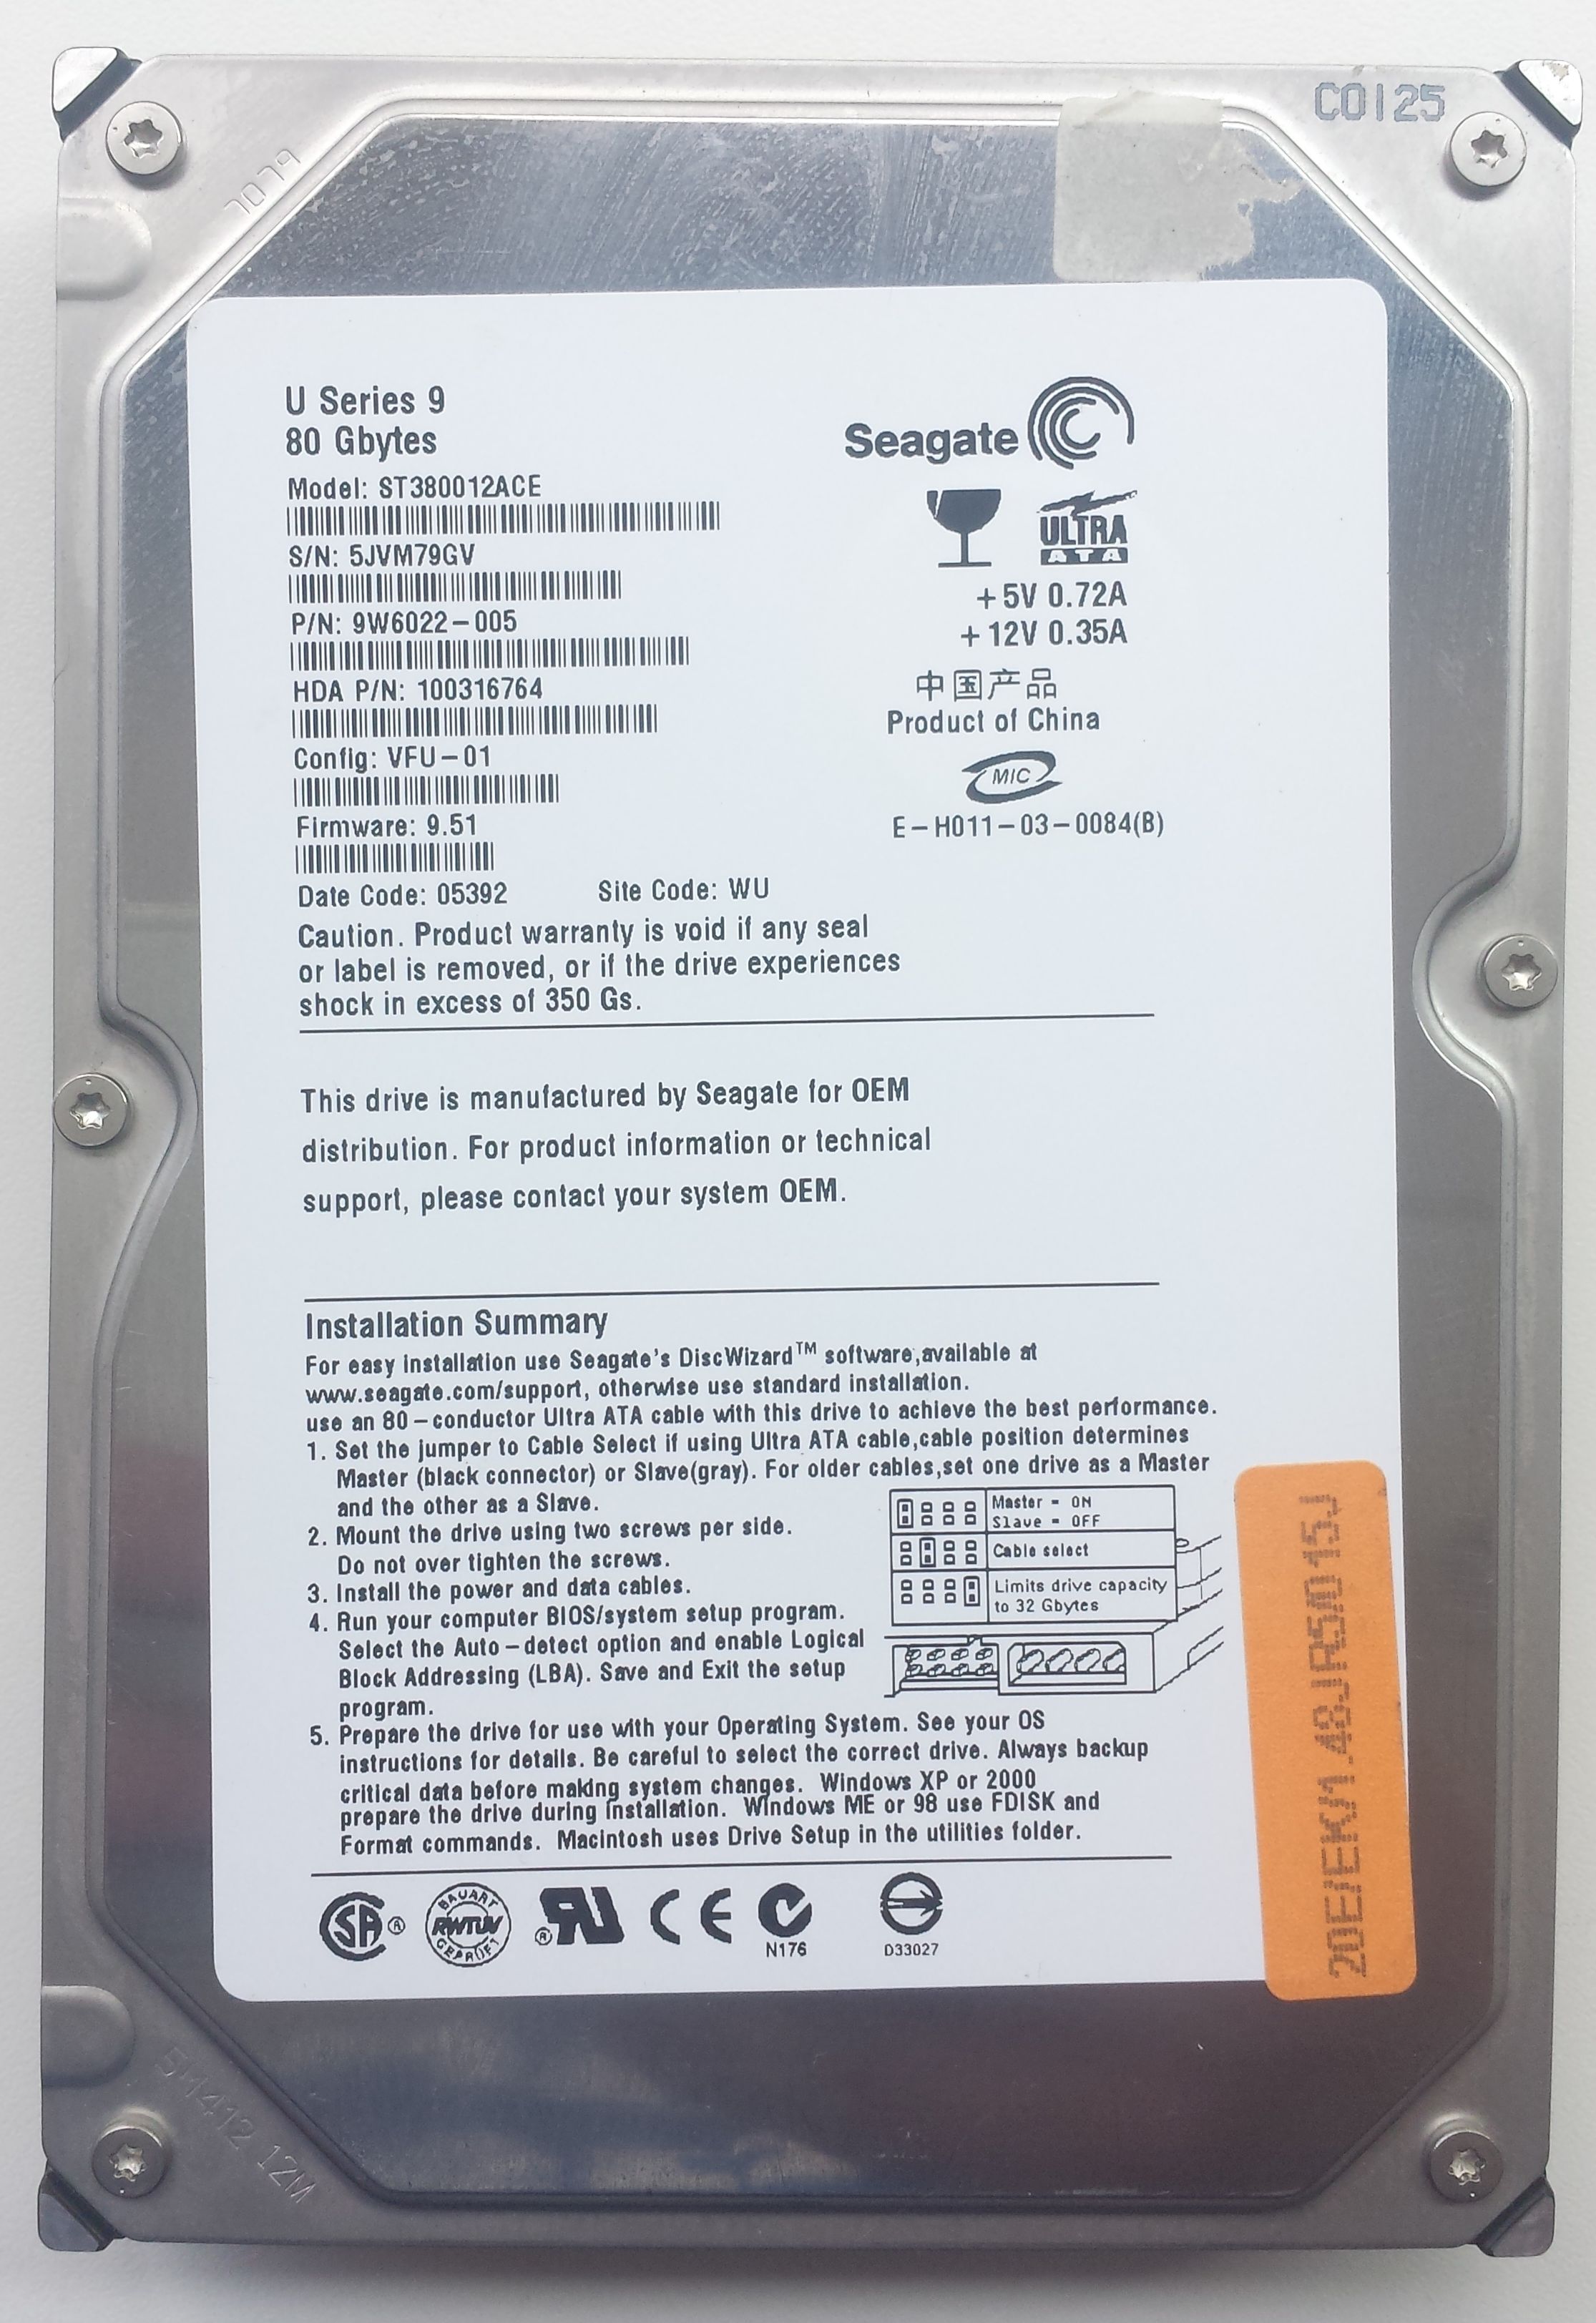 HDD PATA/100 3.5" 80GB / Seagate U Series 9 (ST380012ACE)